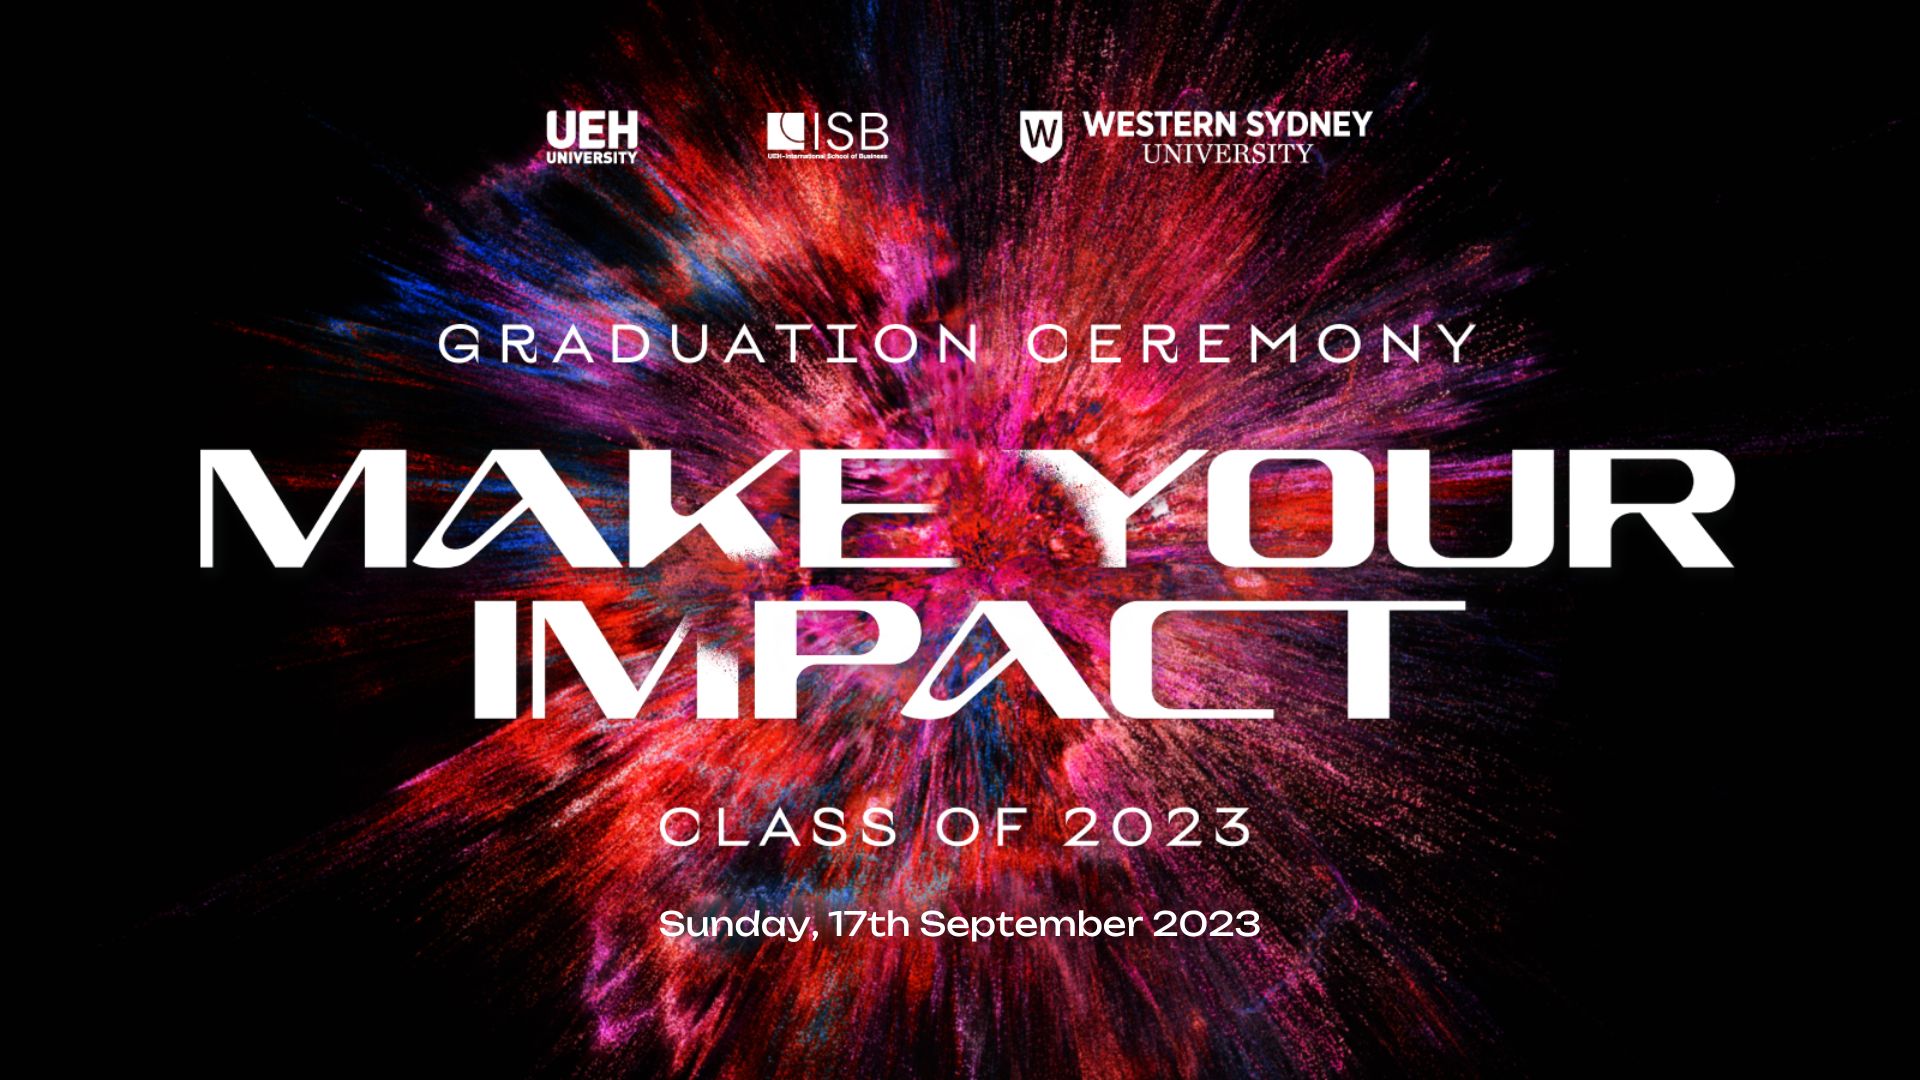 The 2023 Graduation Ceremony: Make Your Impact